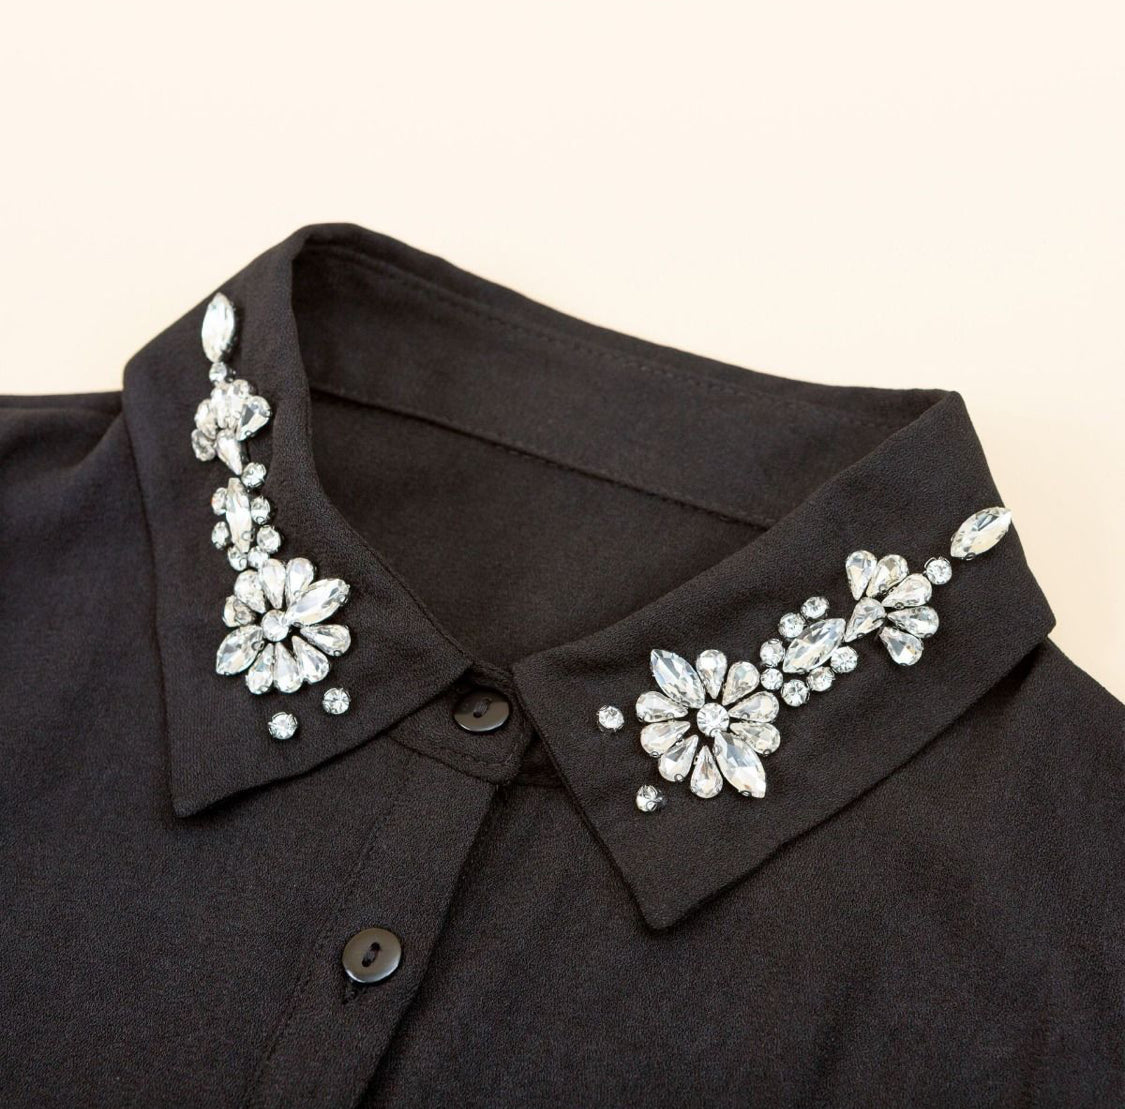 Detachable False Shirt Collars - Black with Crystals